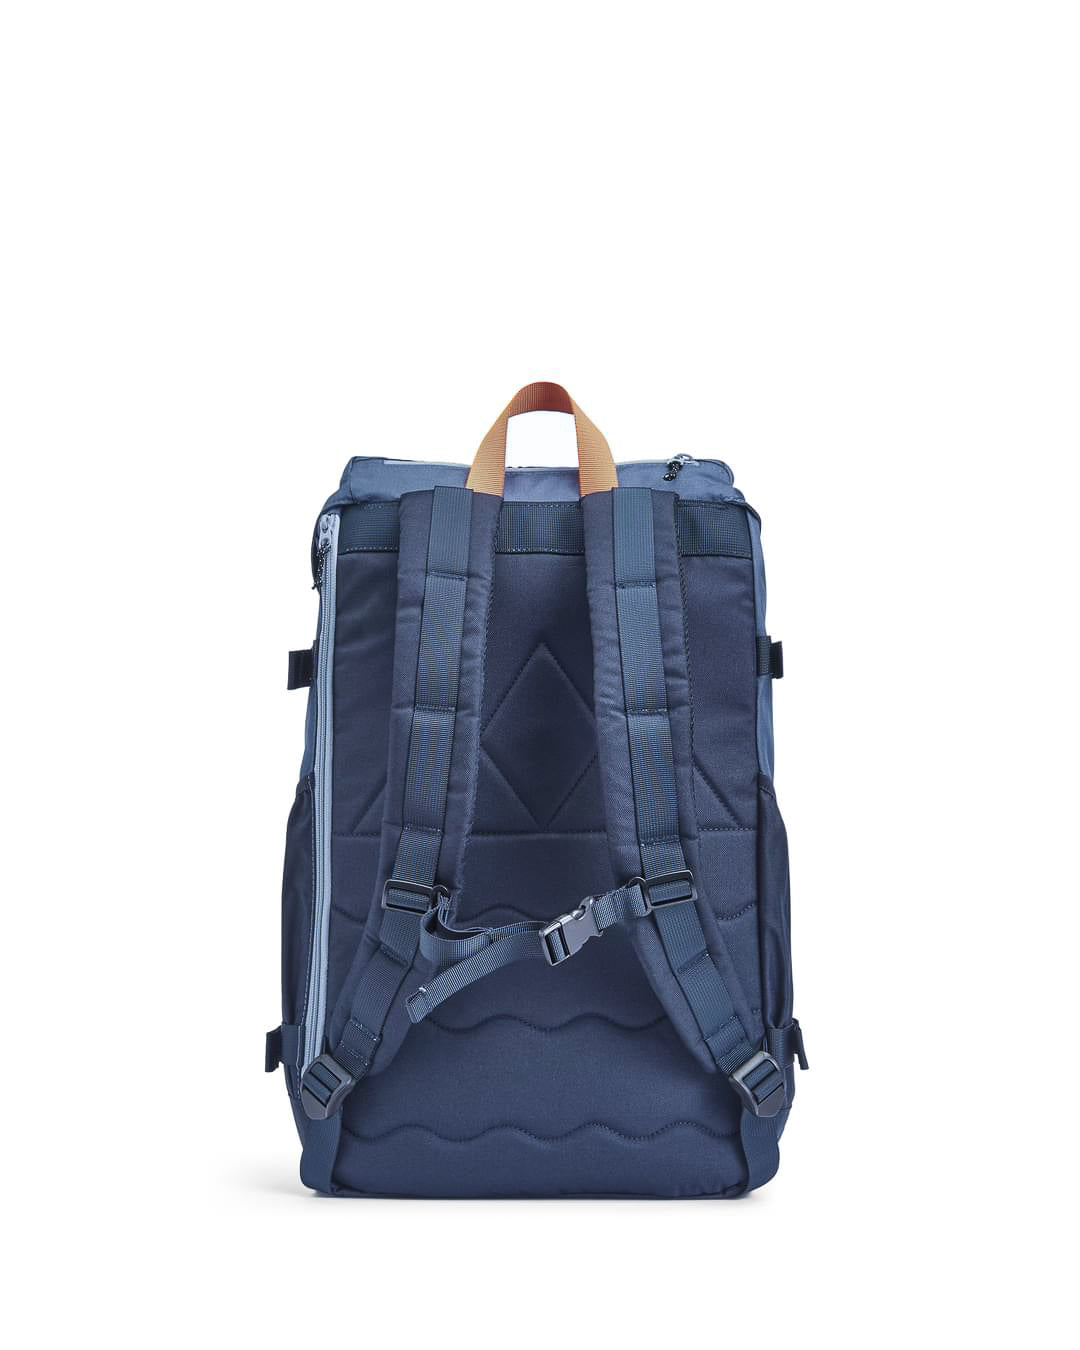 Boondocker Recycled 26L Backpack - Dark Denim/ Deep Navy